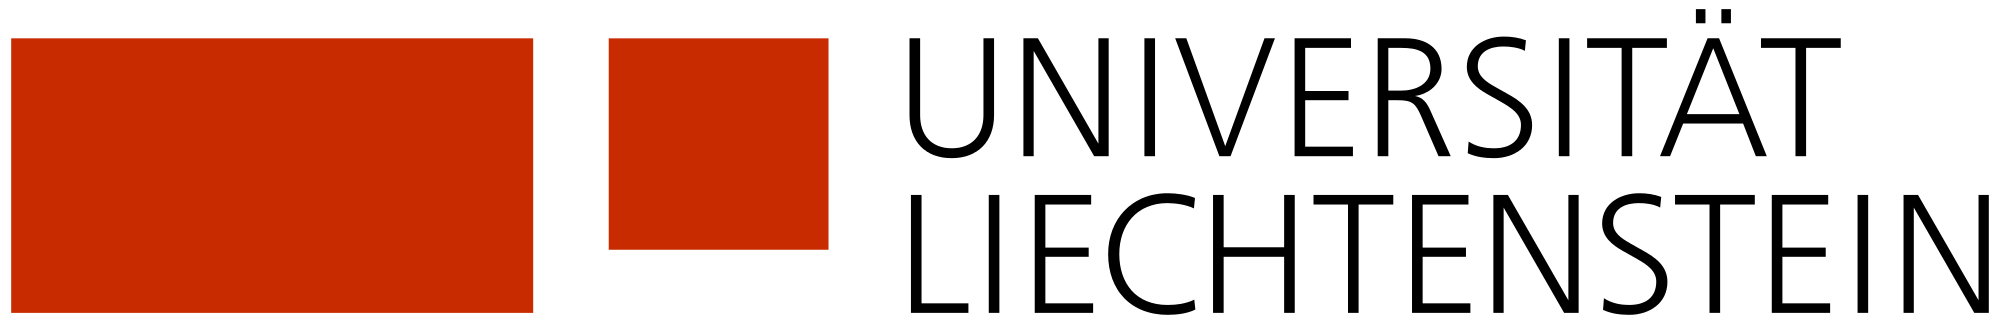 Universität_Liechtenstein_logo.svg.png